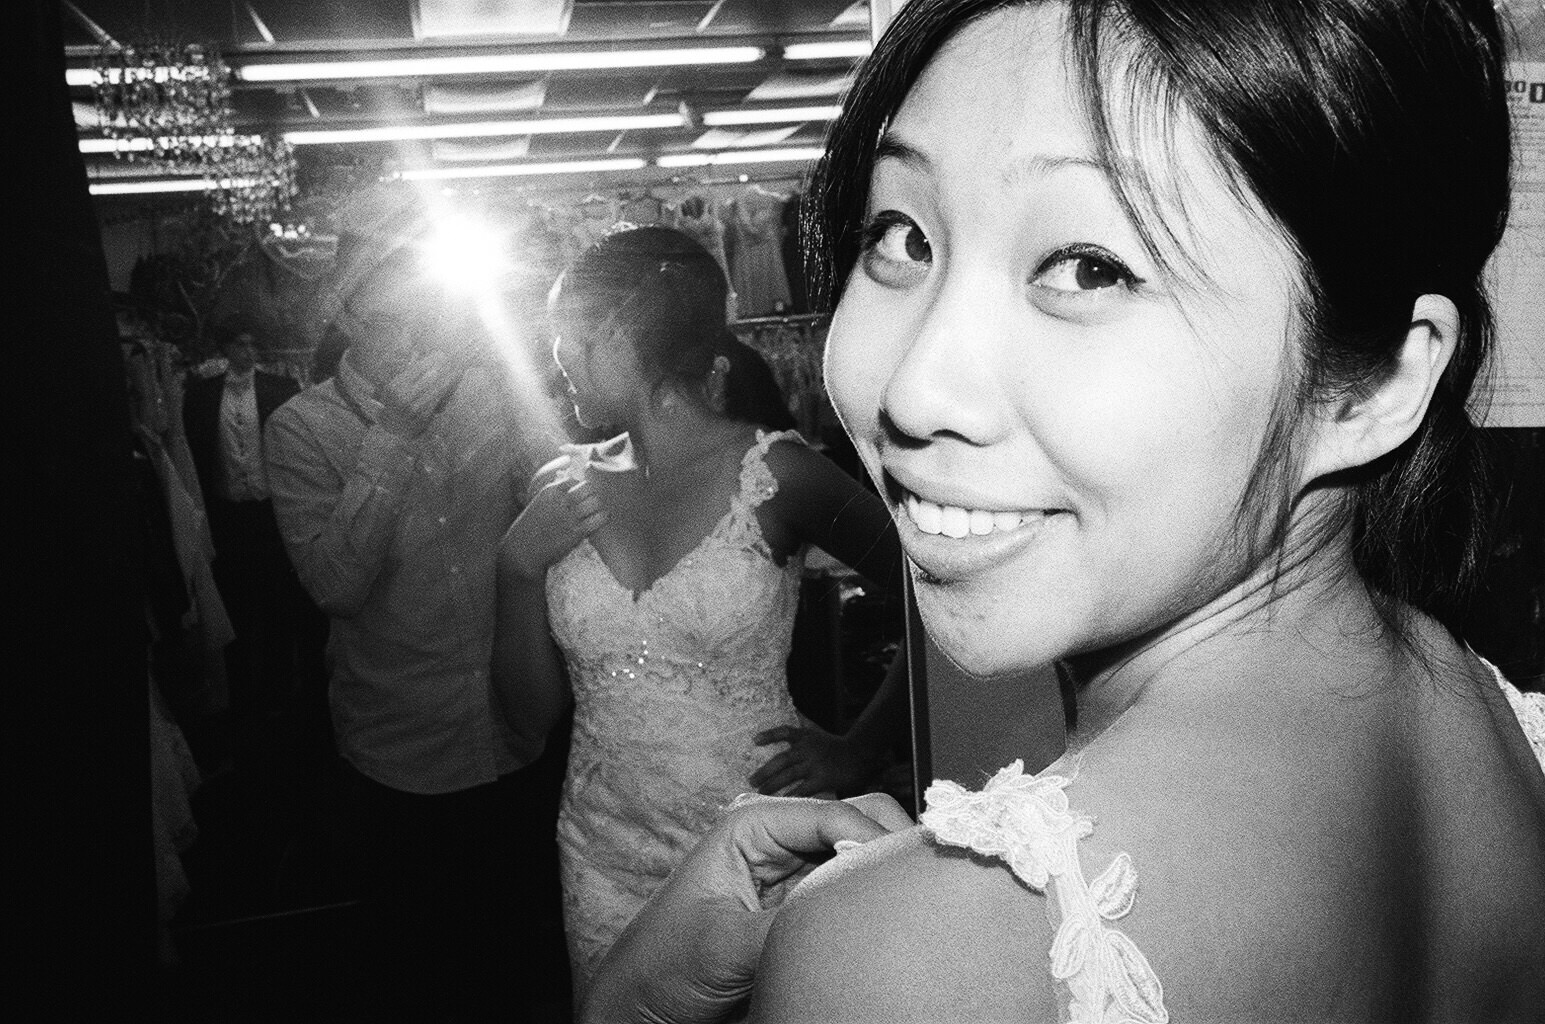 cindy wedding dress look back eric kim self portrait flash trix kodak leica mp 35mm